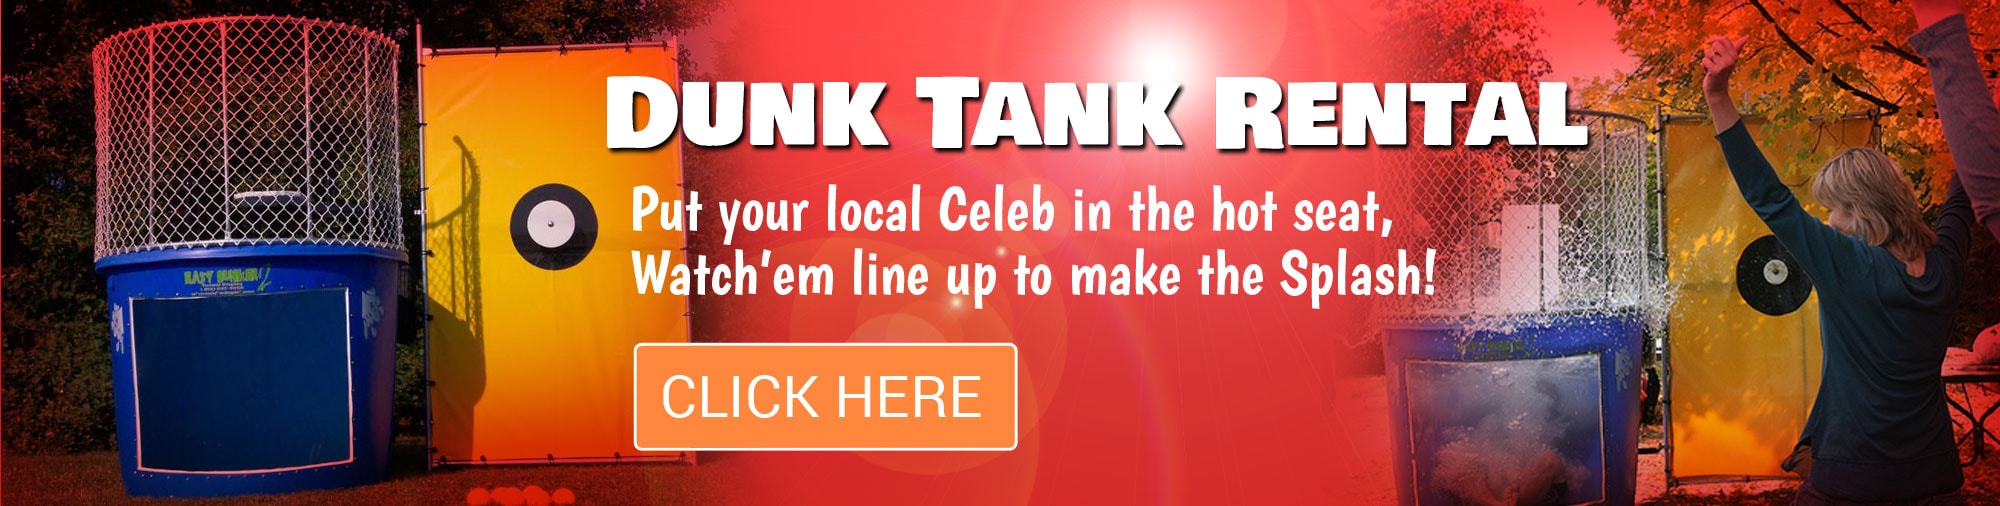 dunk tank rental